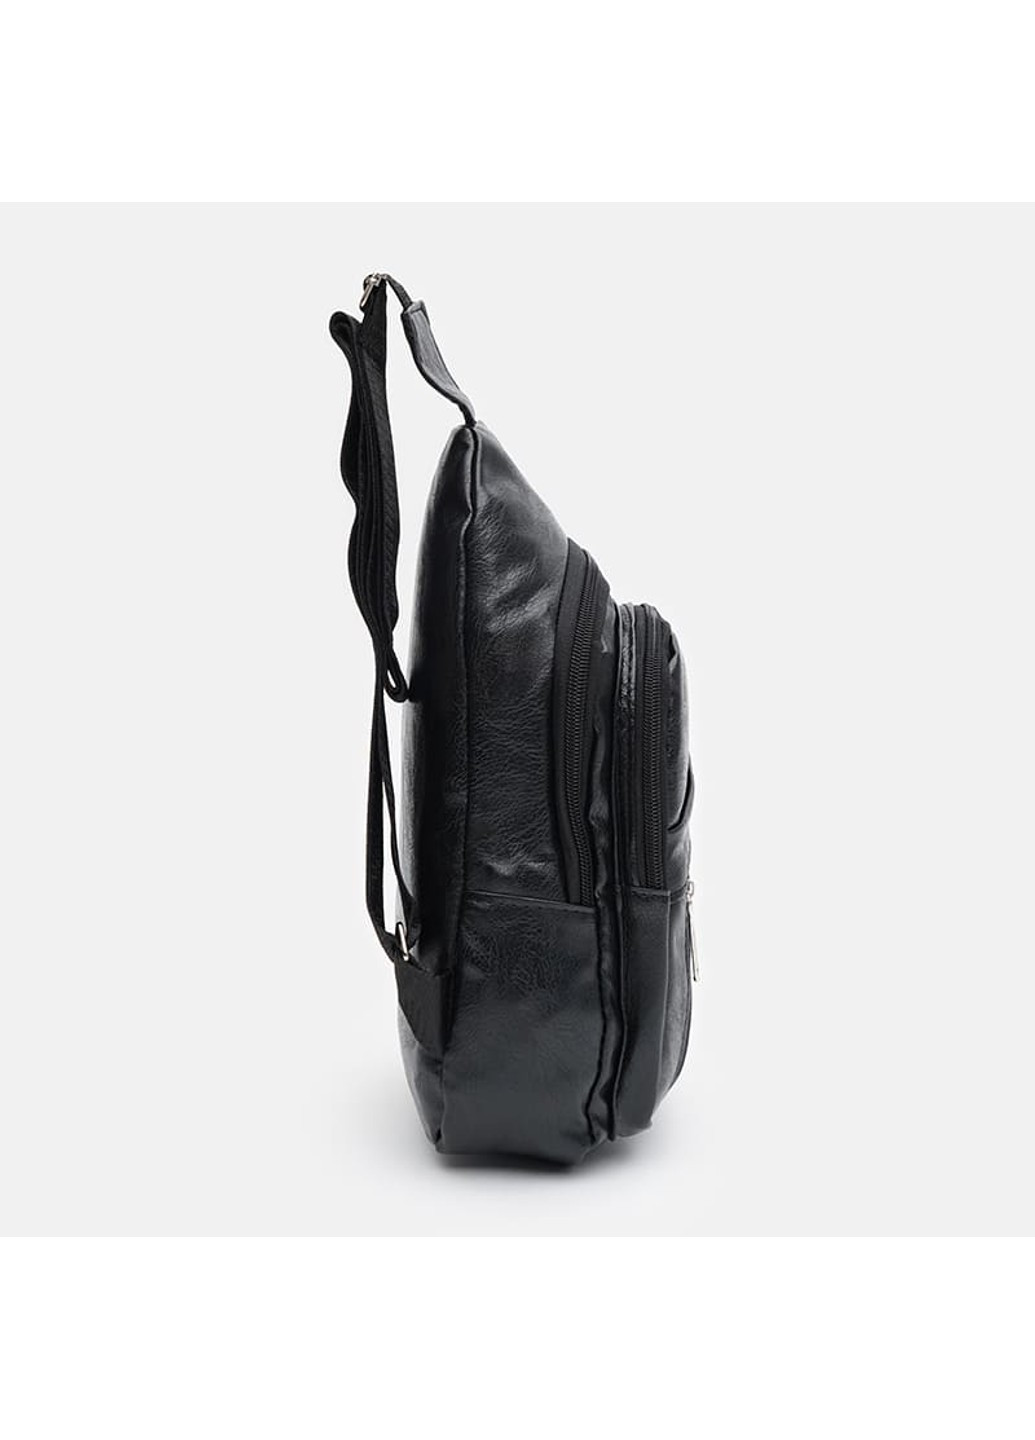 Мужской рюкзак через плечо C1920bl-black Monsen (266143019)